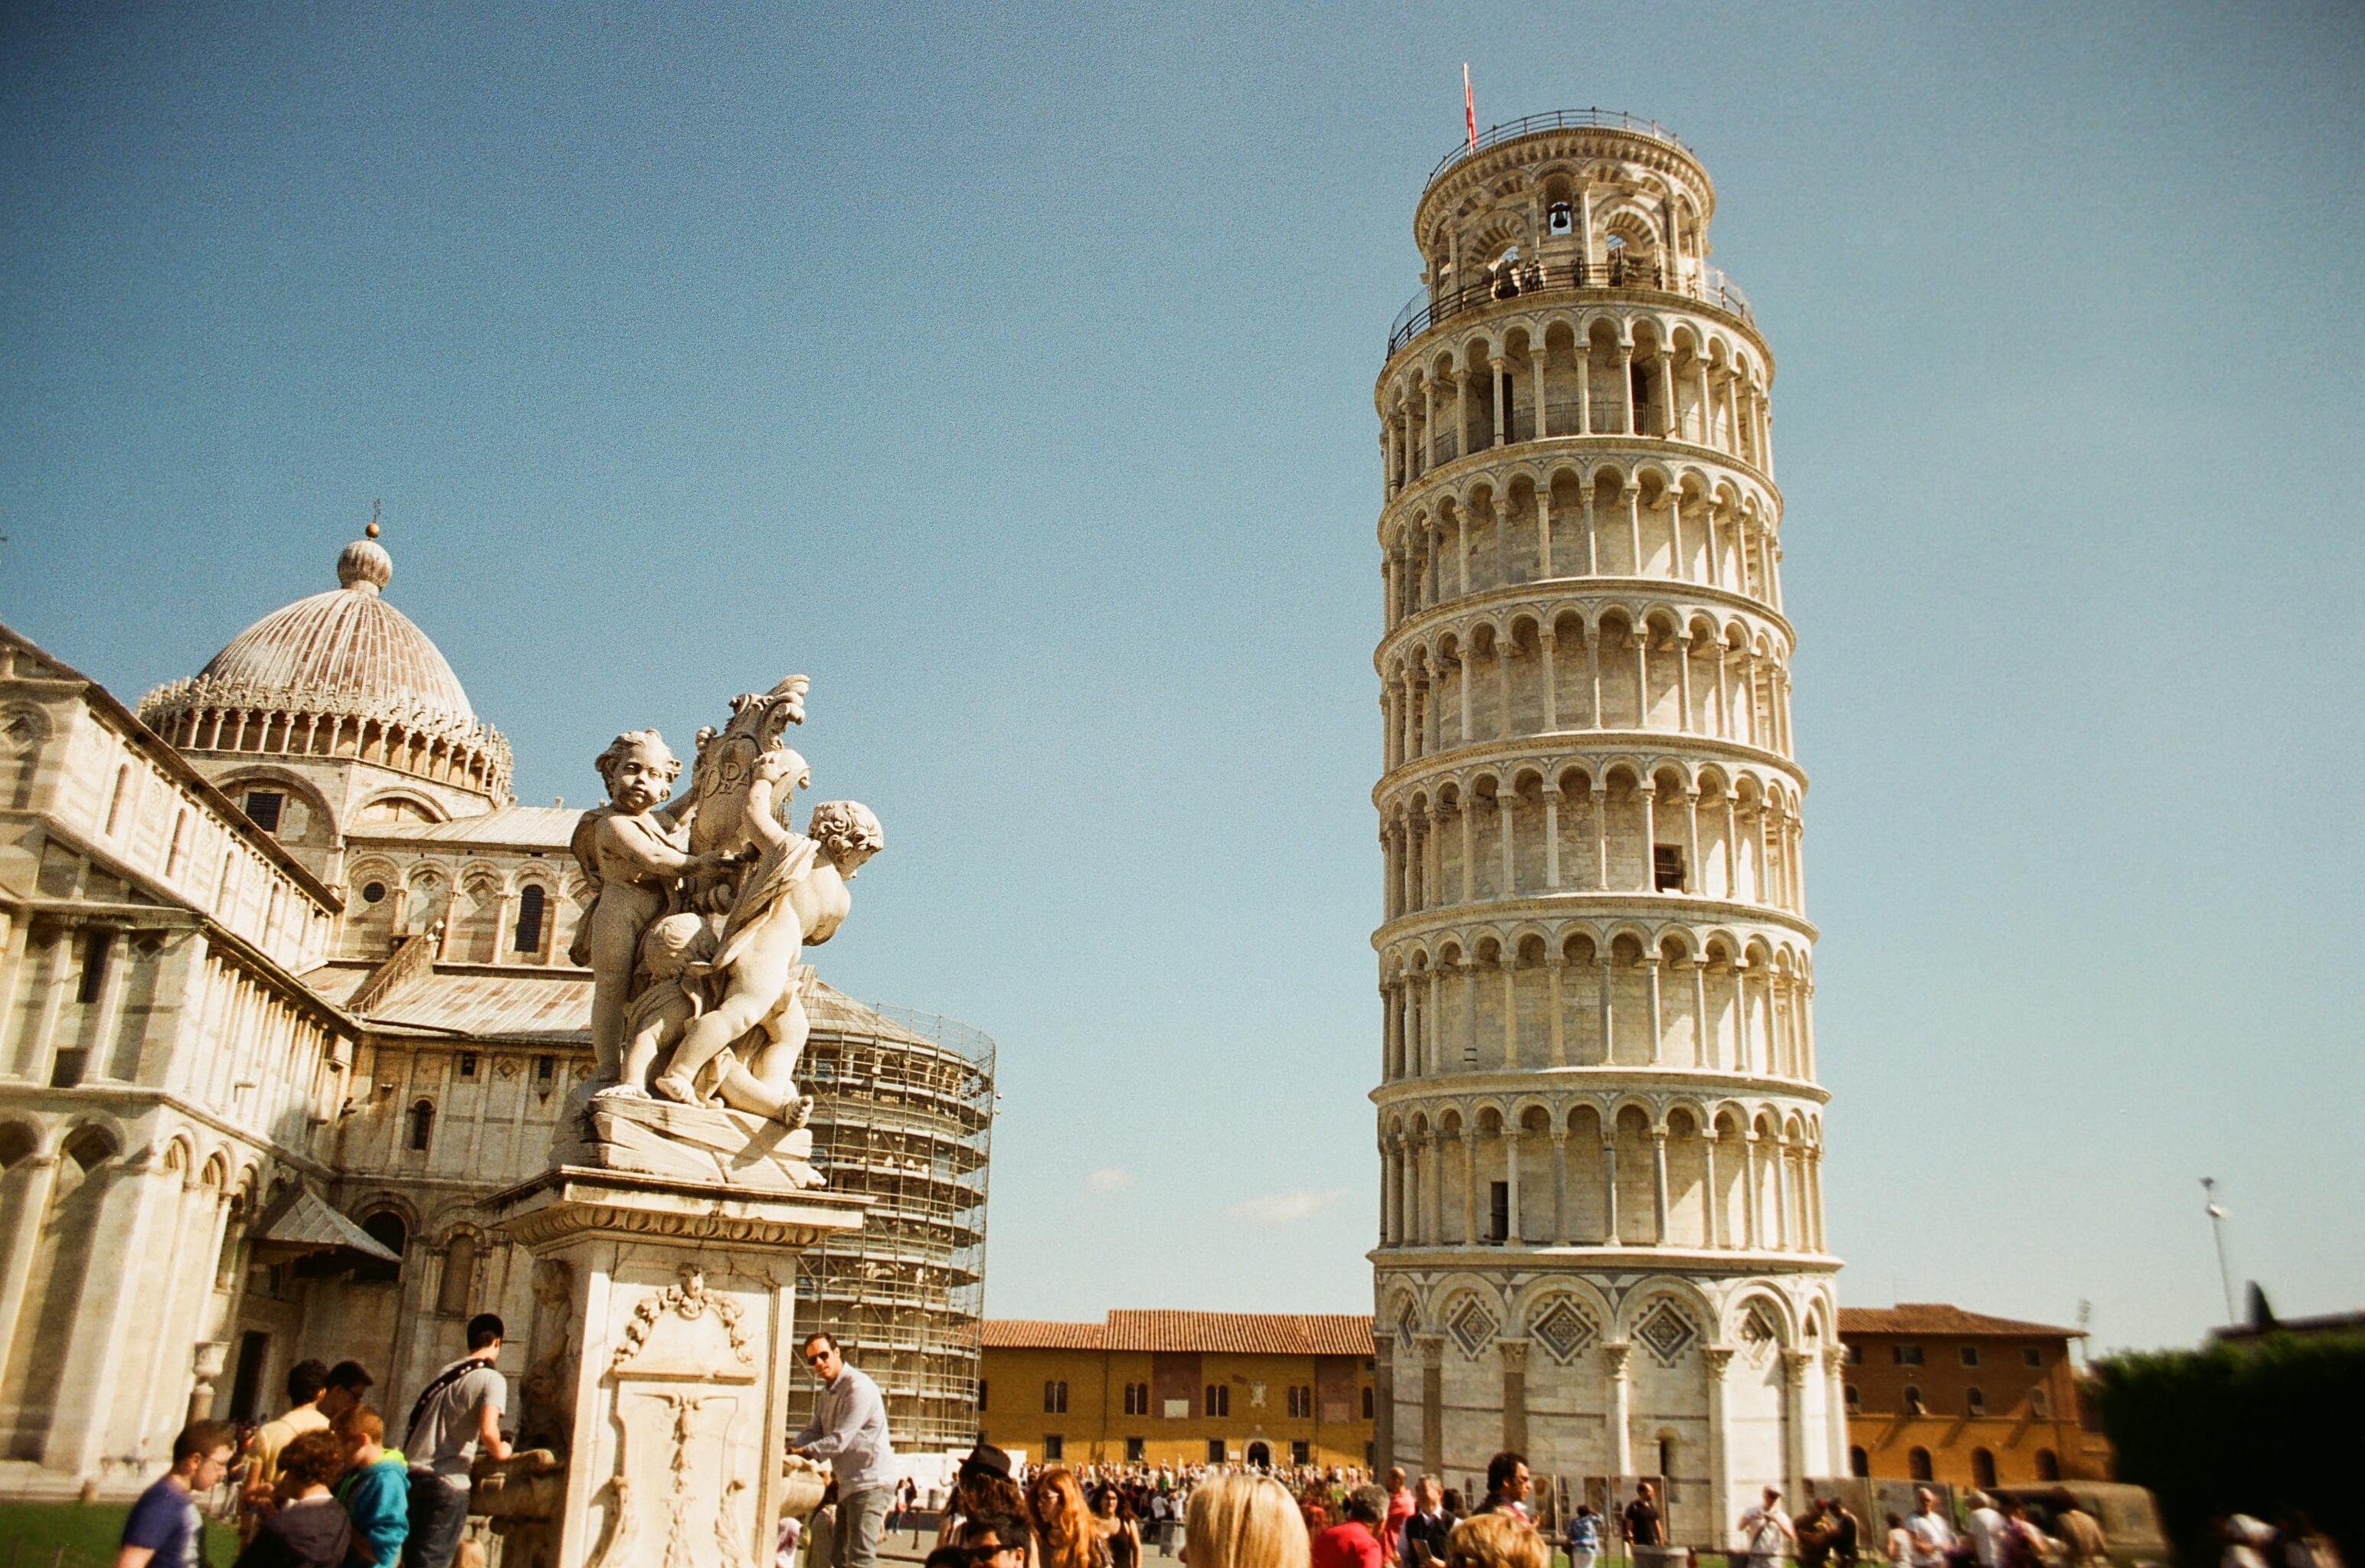 65880010, Tower Pisa